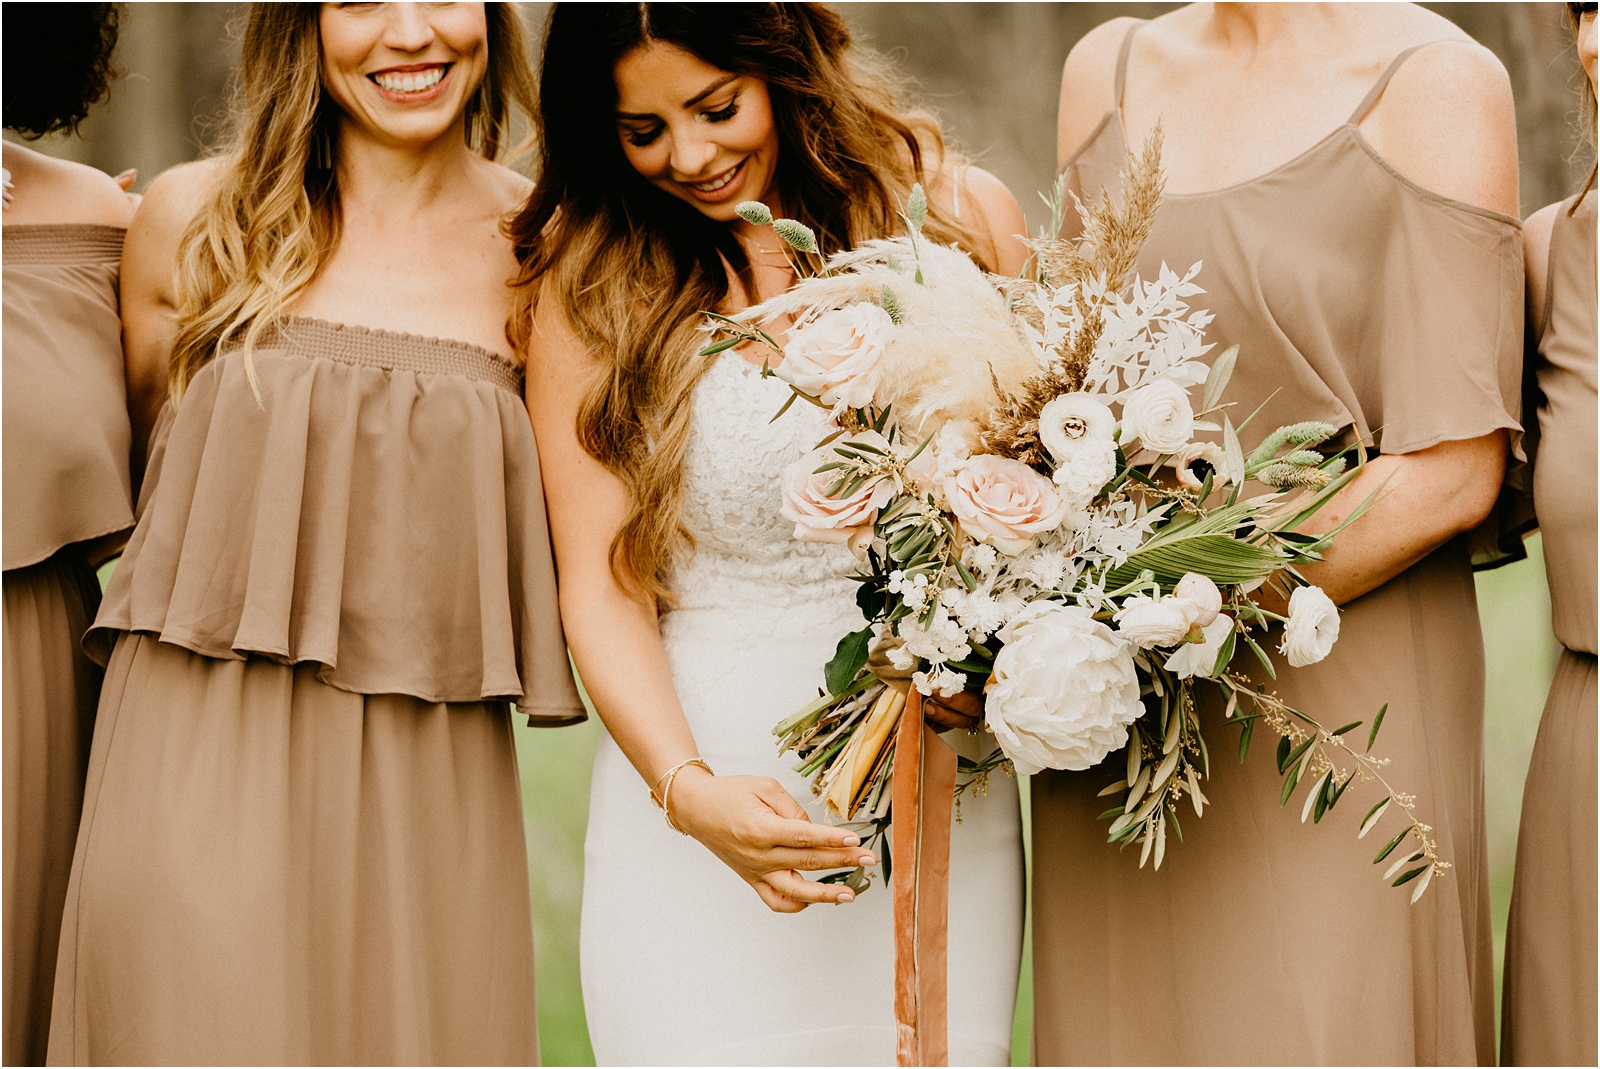 Do you need to do a wedding bouquet toss?